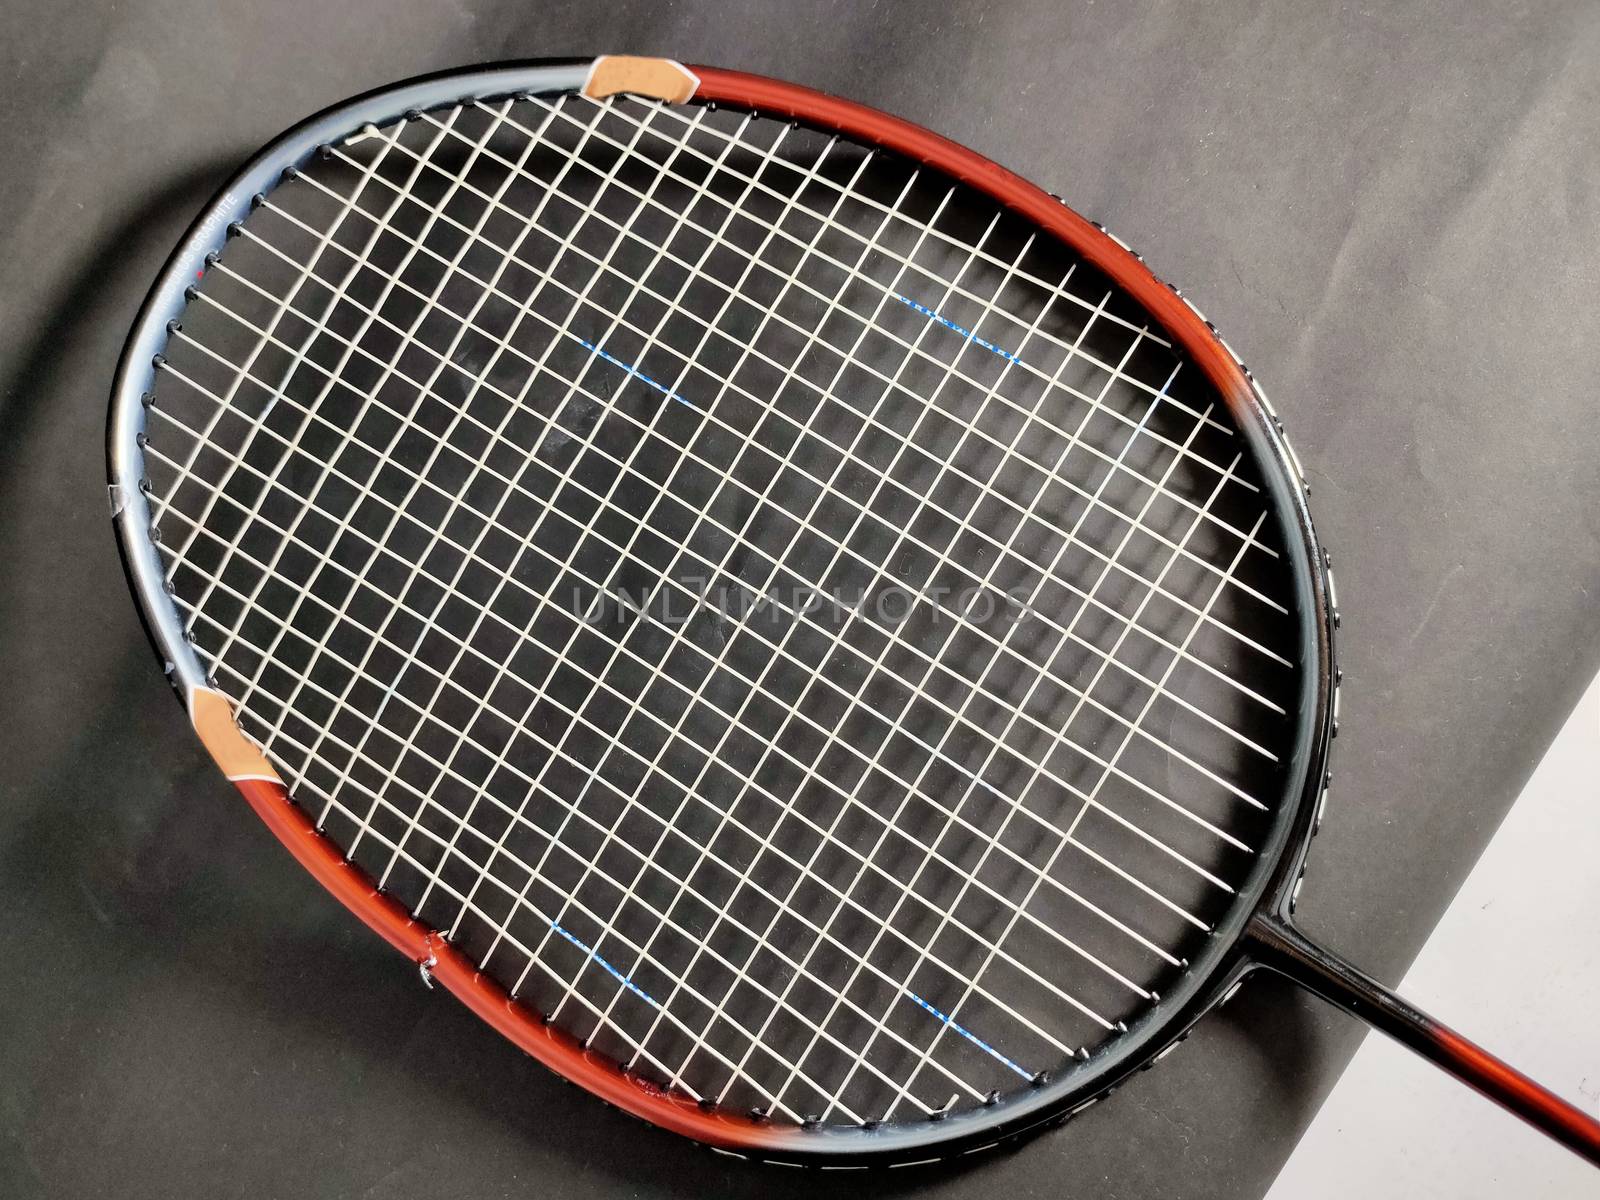 A Broken badminton racket on black background